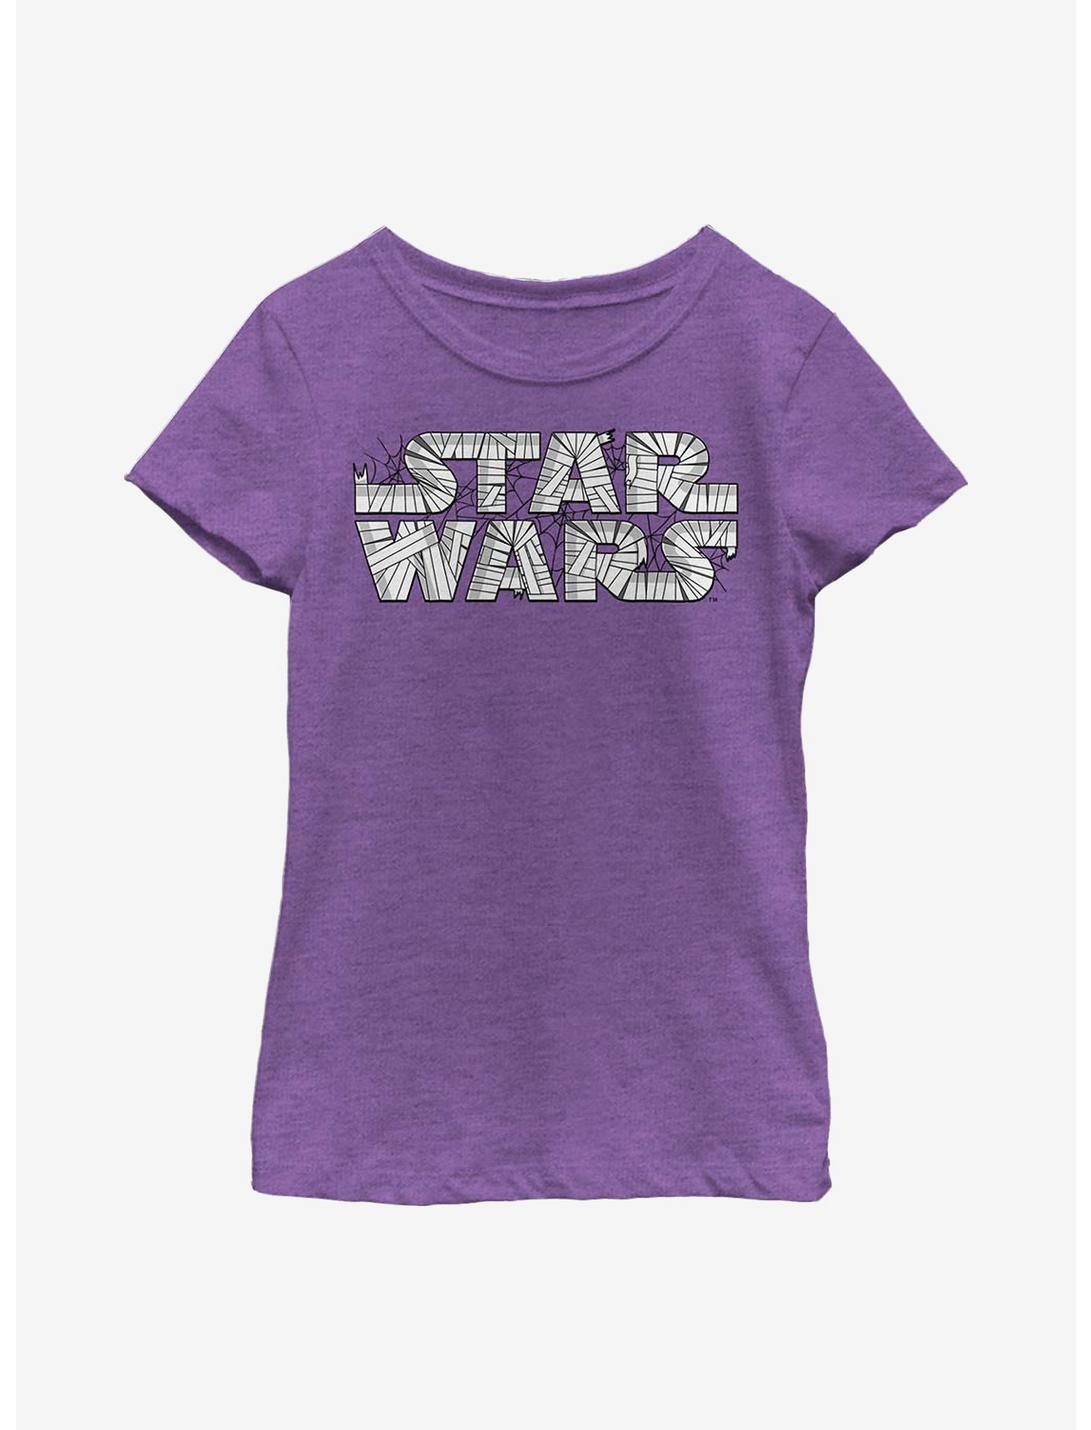 Star Wars Mummy Logo Youth Girls T-Shirt, PURPLE BERRY, hi-res